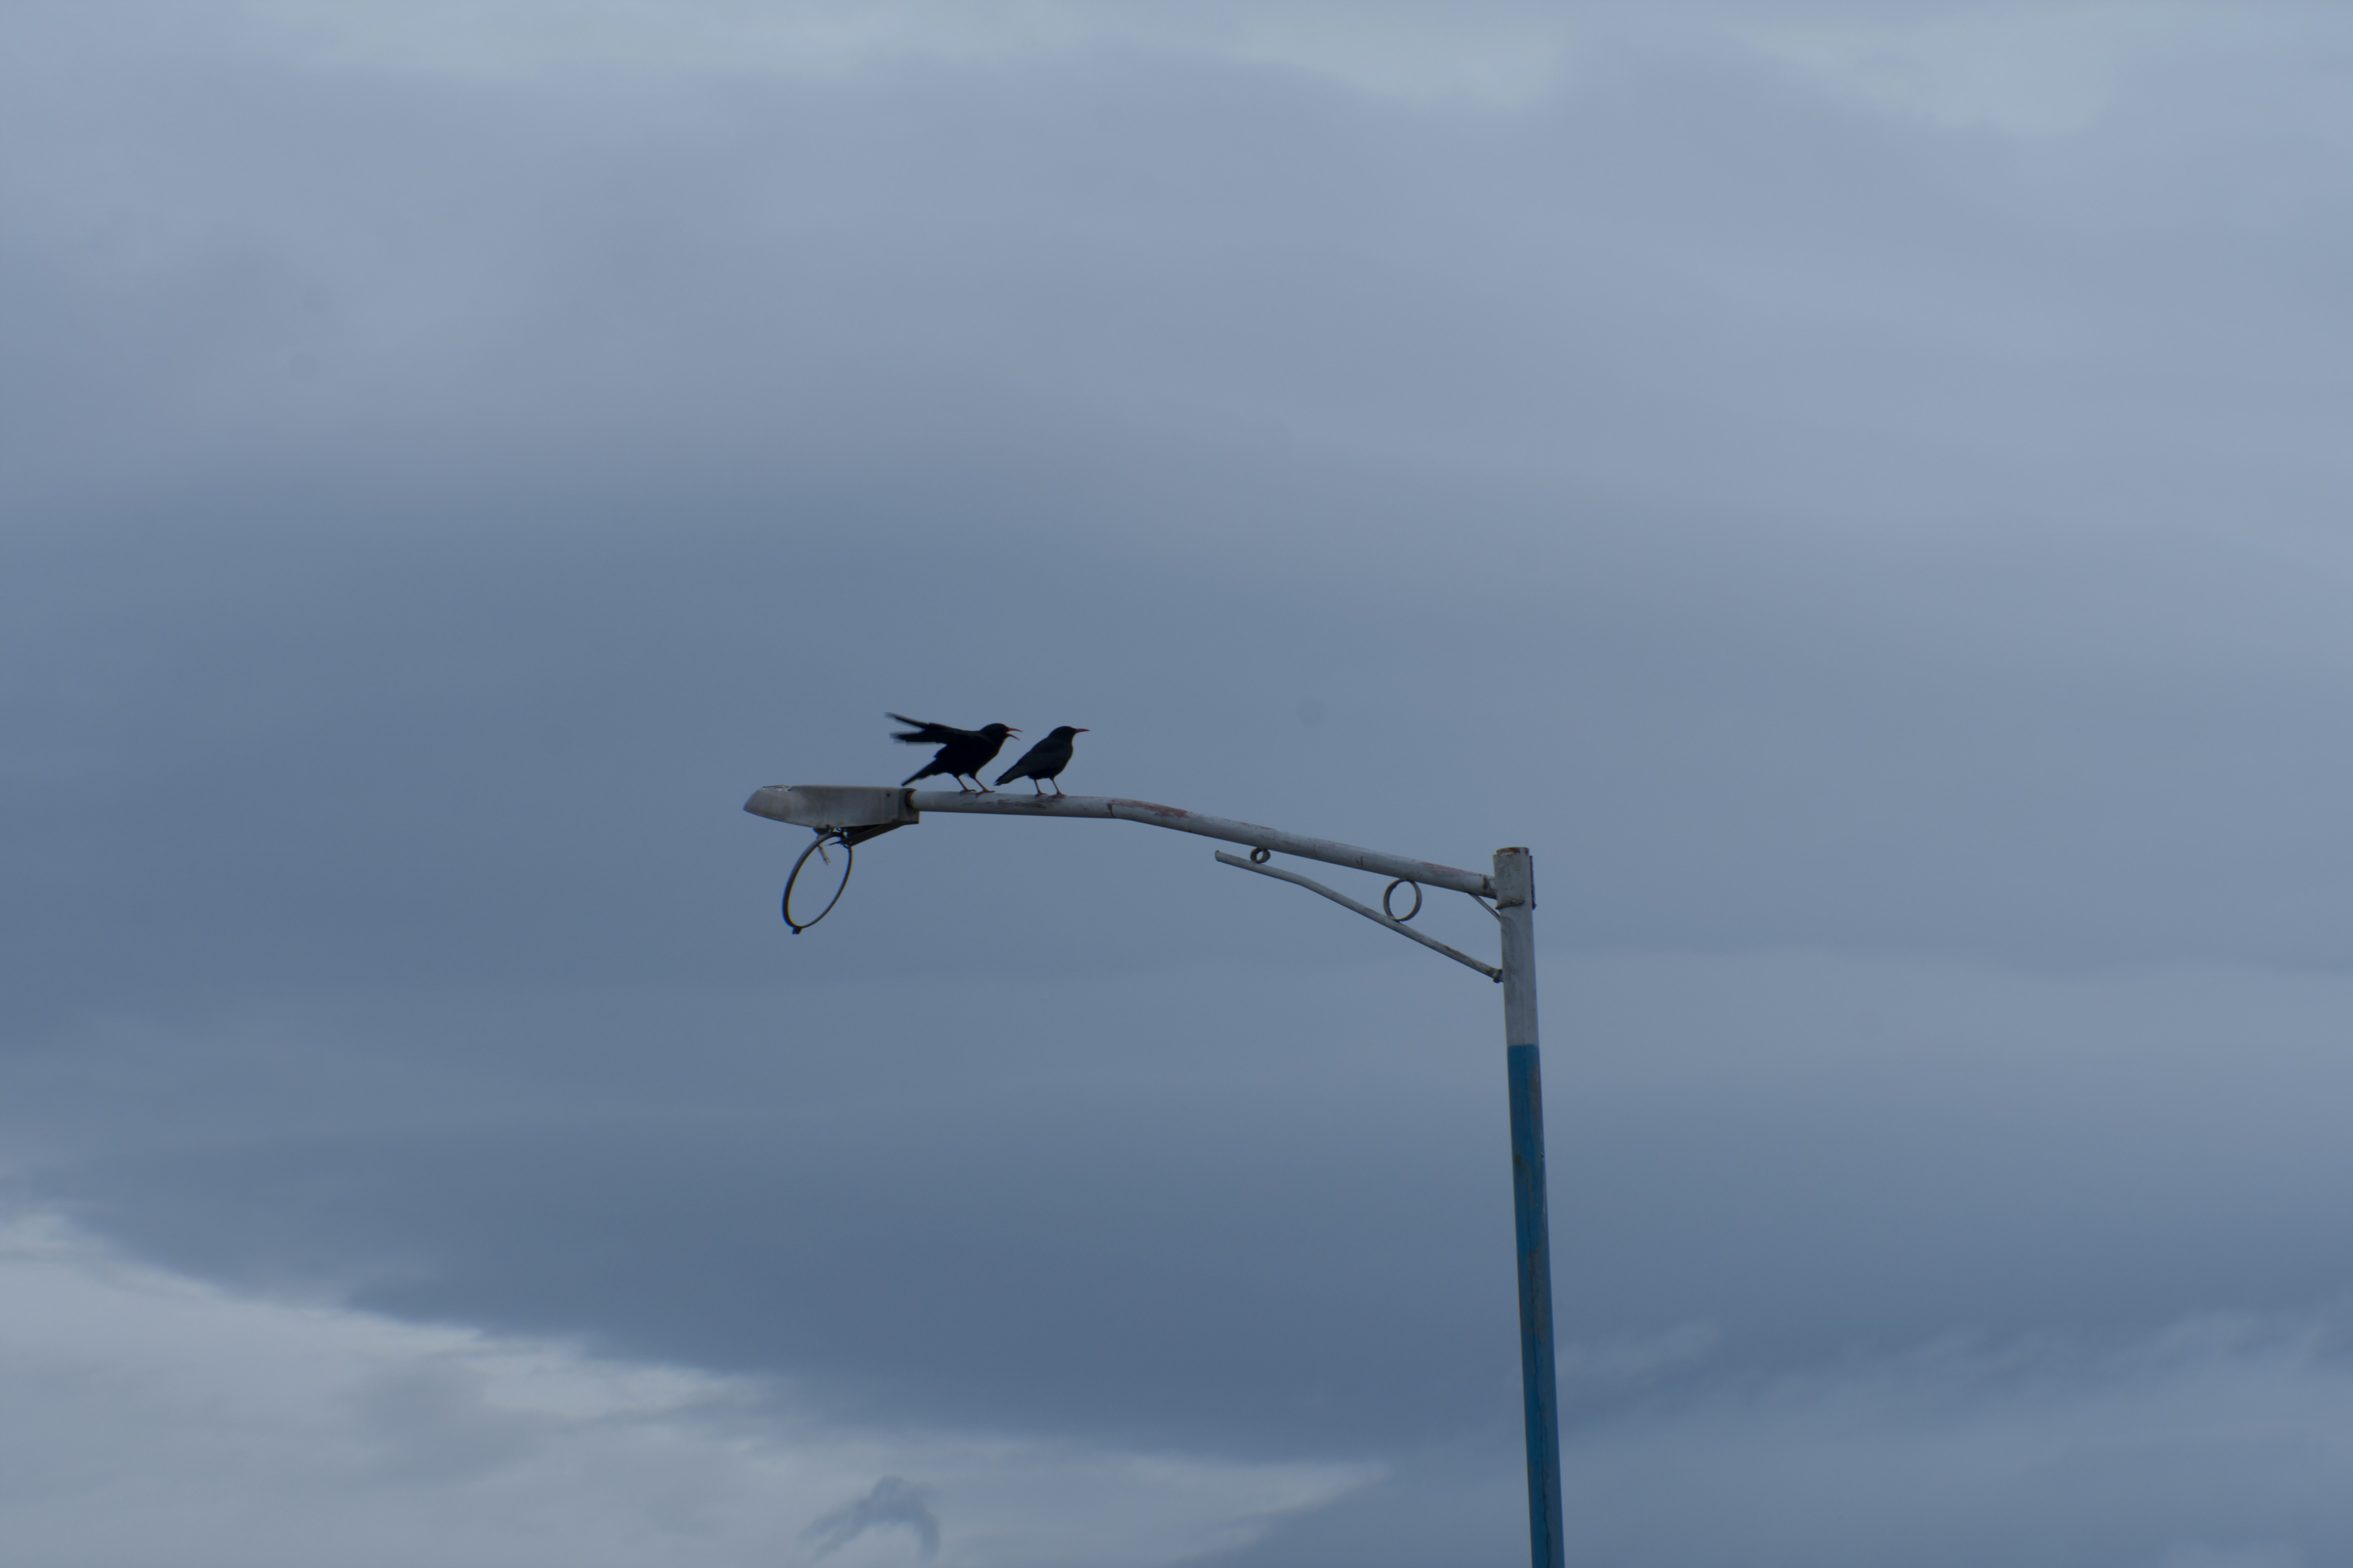 black bird on gray metal stand during daytime